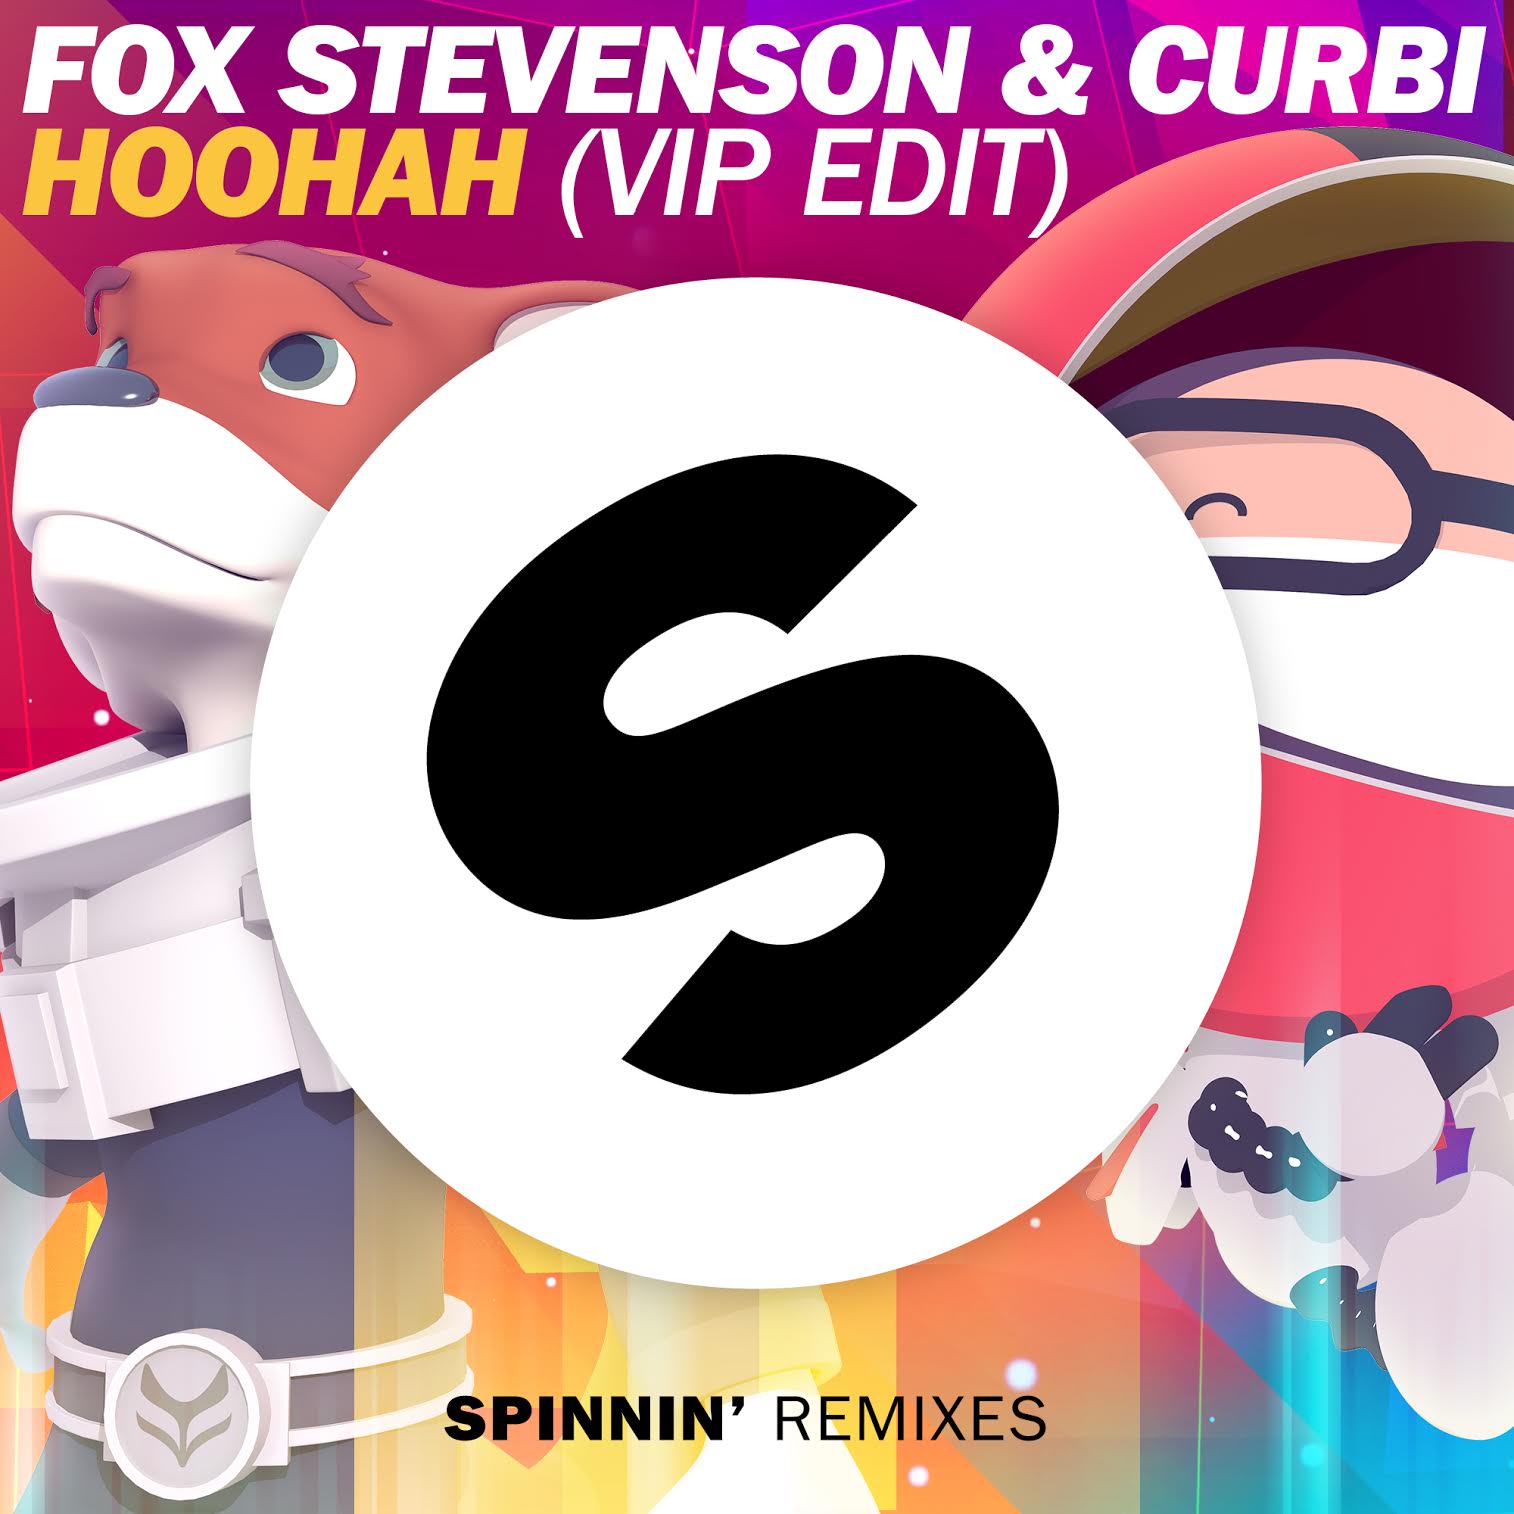 Fox Stevenson & Curbi Hoohah - VIP Edit cover artwork